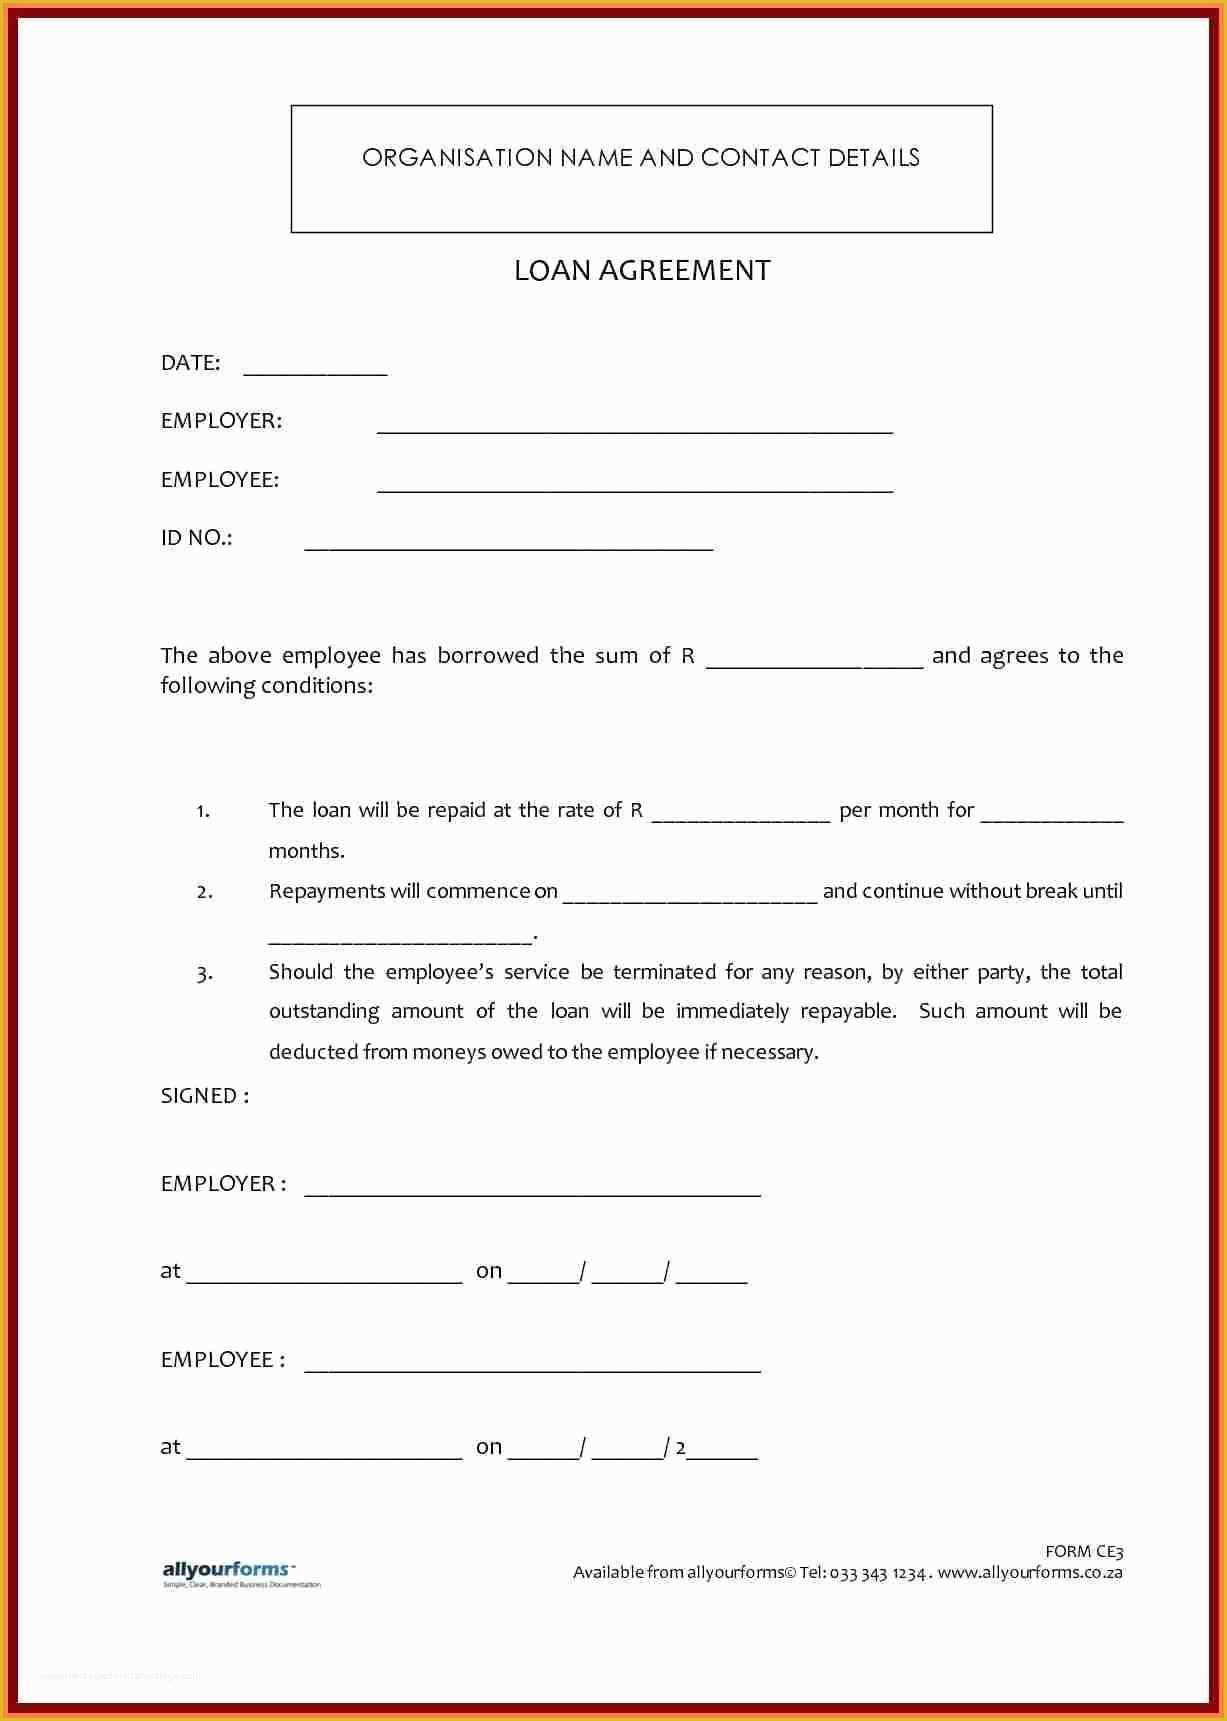 Free Online Loan Agreement Template Of 8 Loan Agreement Template Between Family Members